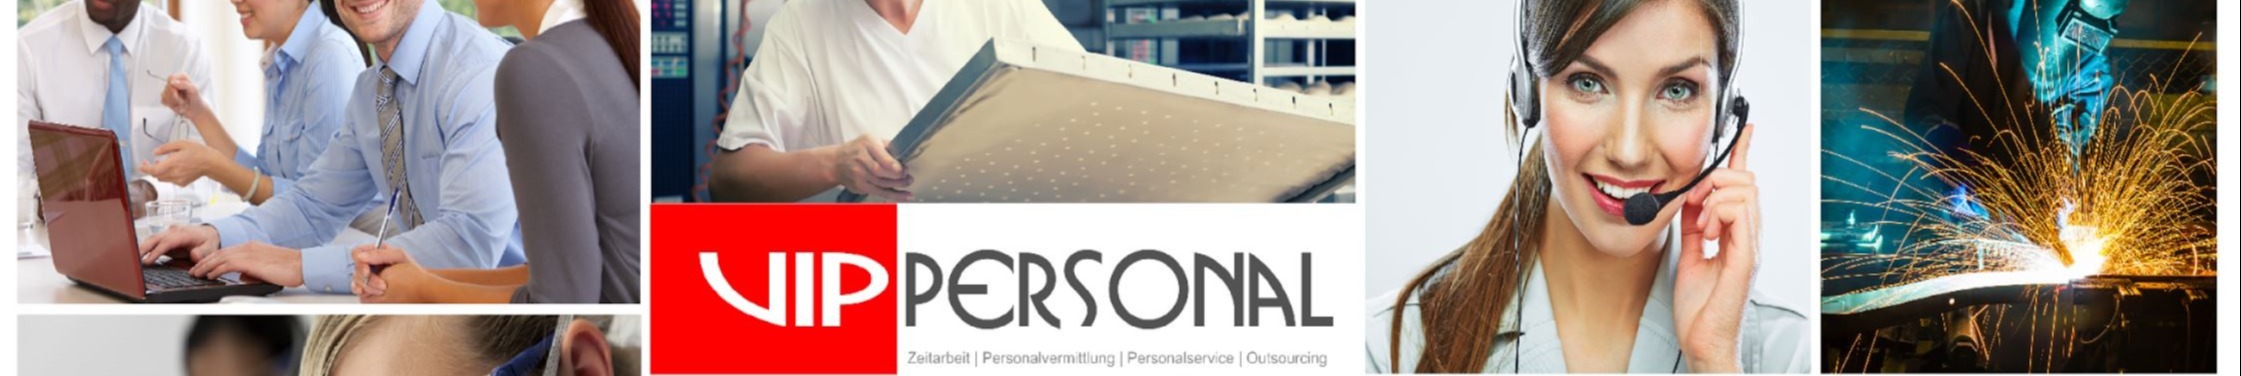 VIP PERSONAL GmbH background